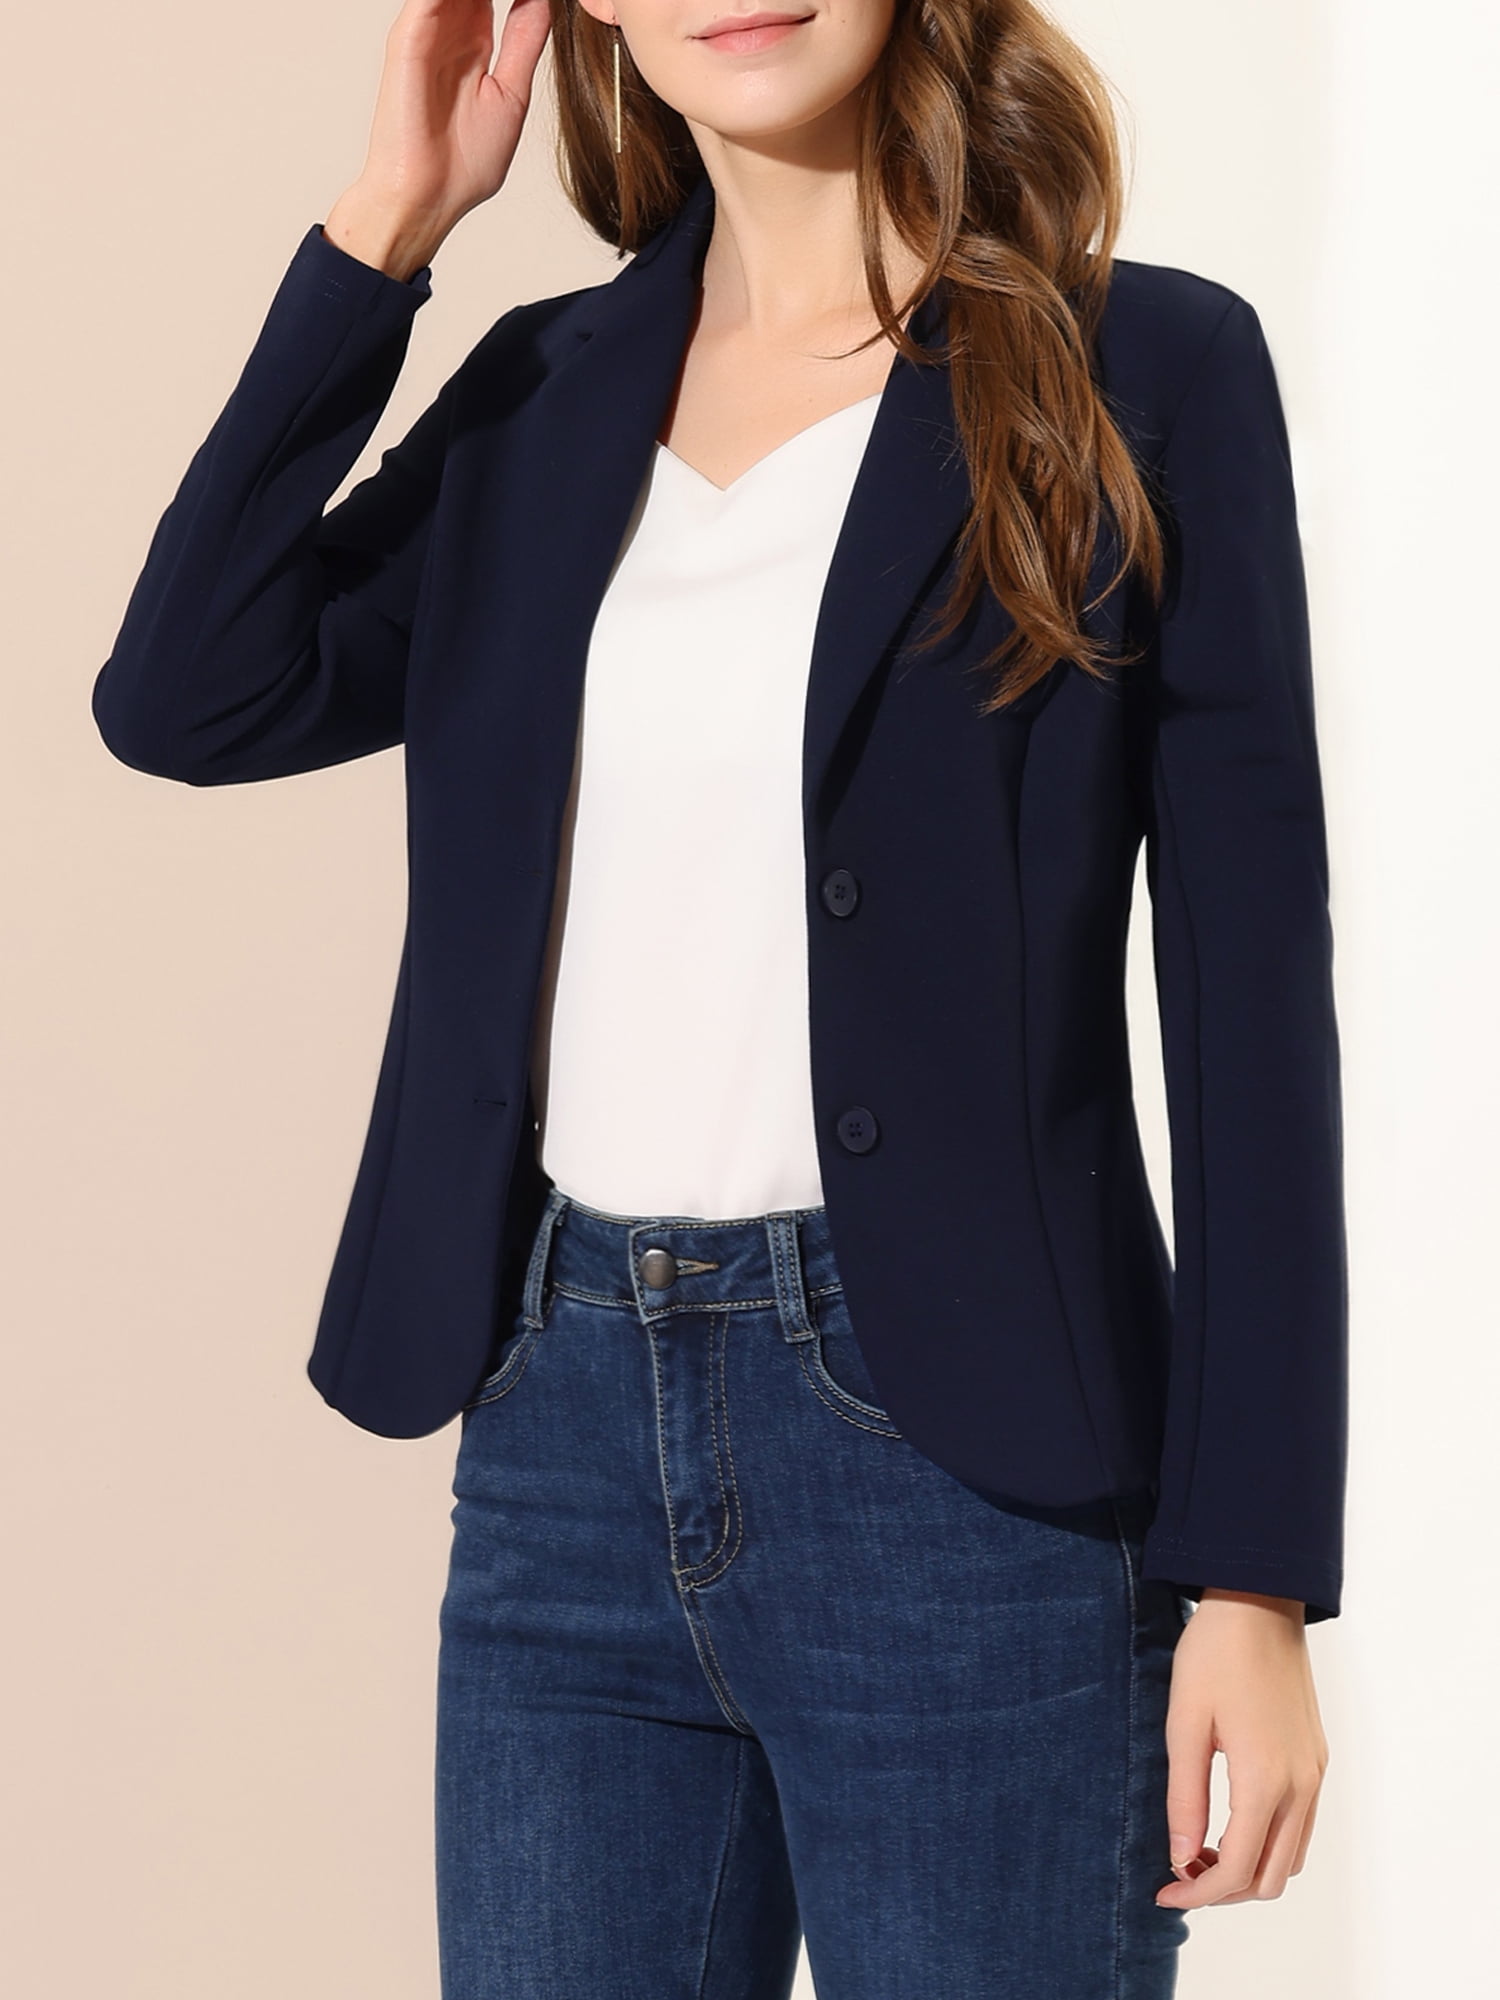 Allegra K Women's Work Office Lapel Collar Strectchy Jacket Suit Blazer 